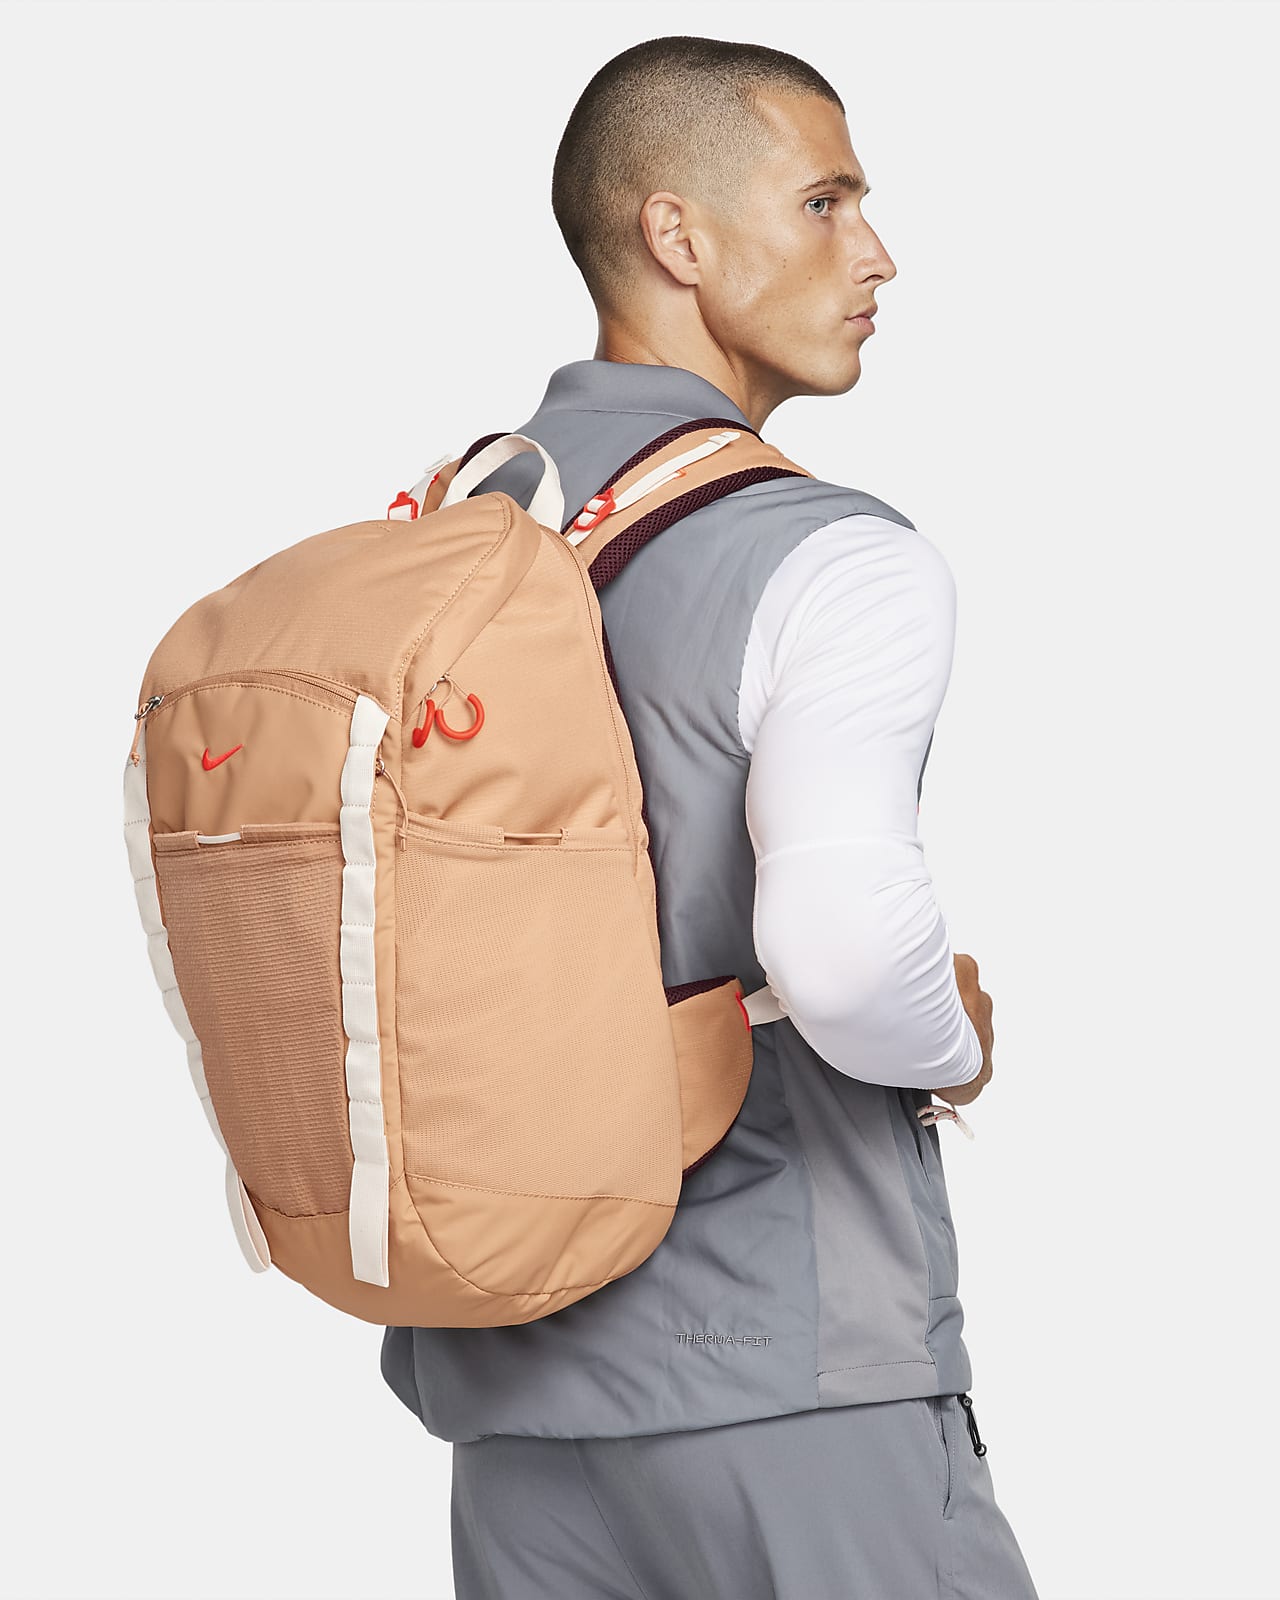 Buy BIG STUDENT BACKPACK Bag from JanSport Aus